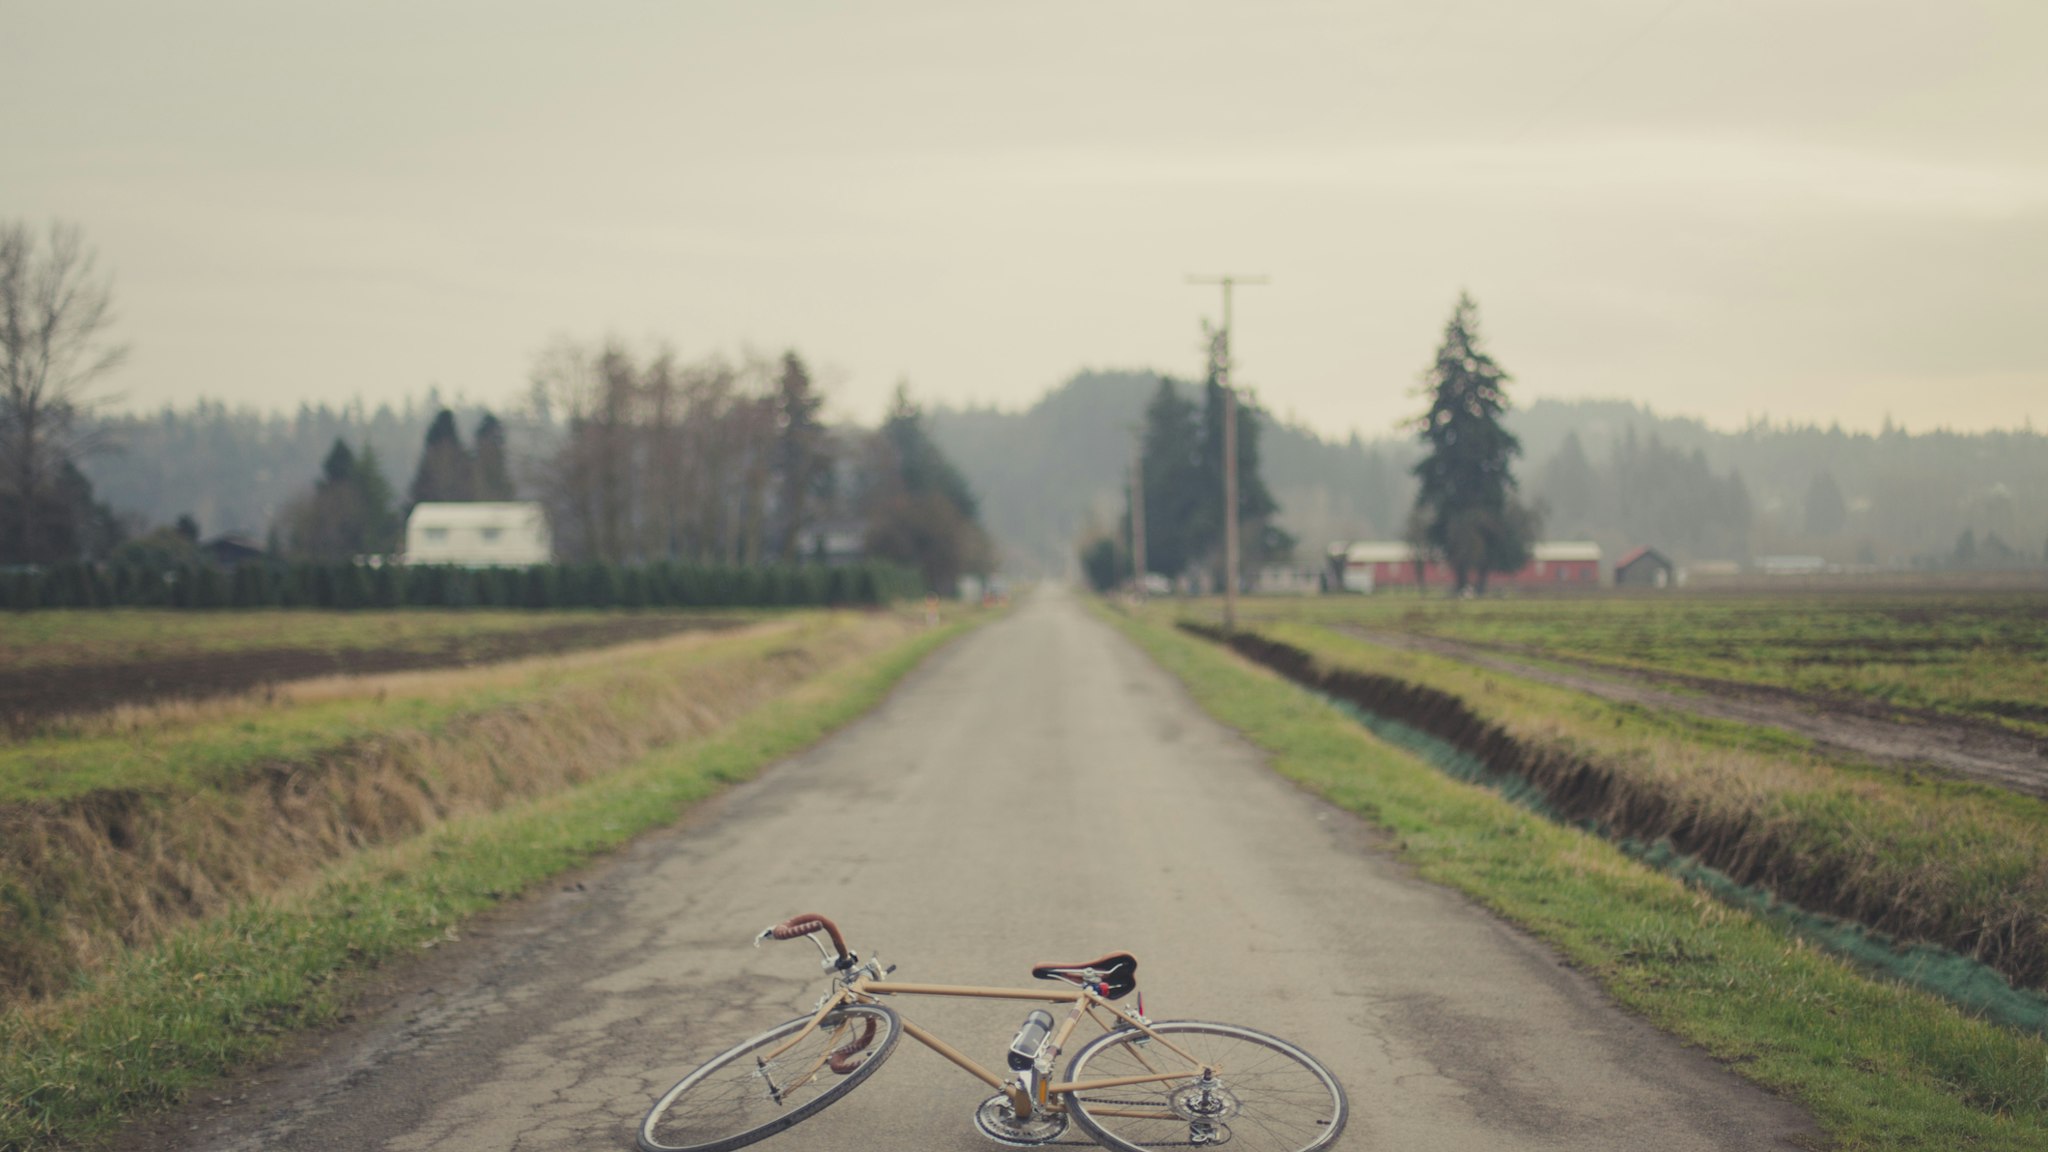 Bicycle lying on road - stock photo